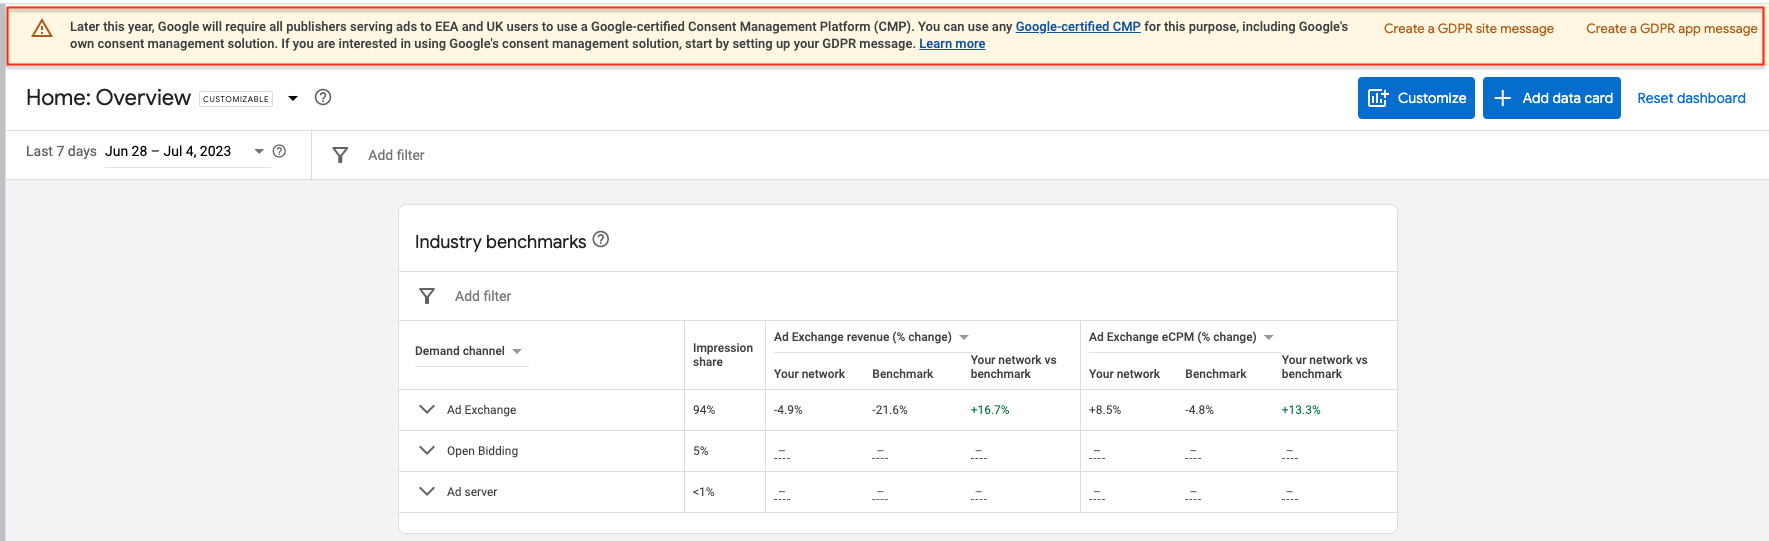 Google-certified Consent Management Platform (CMP)